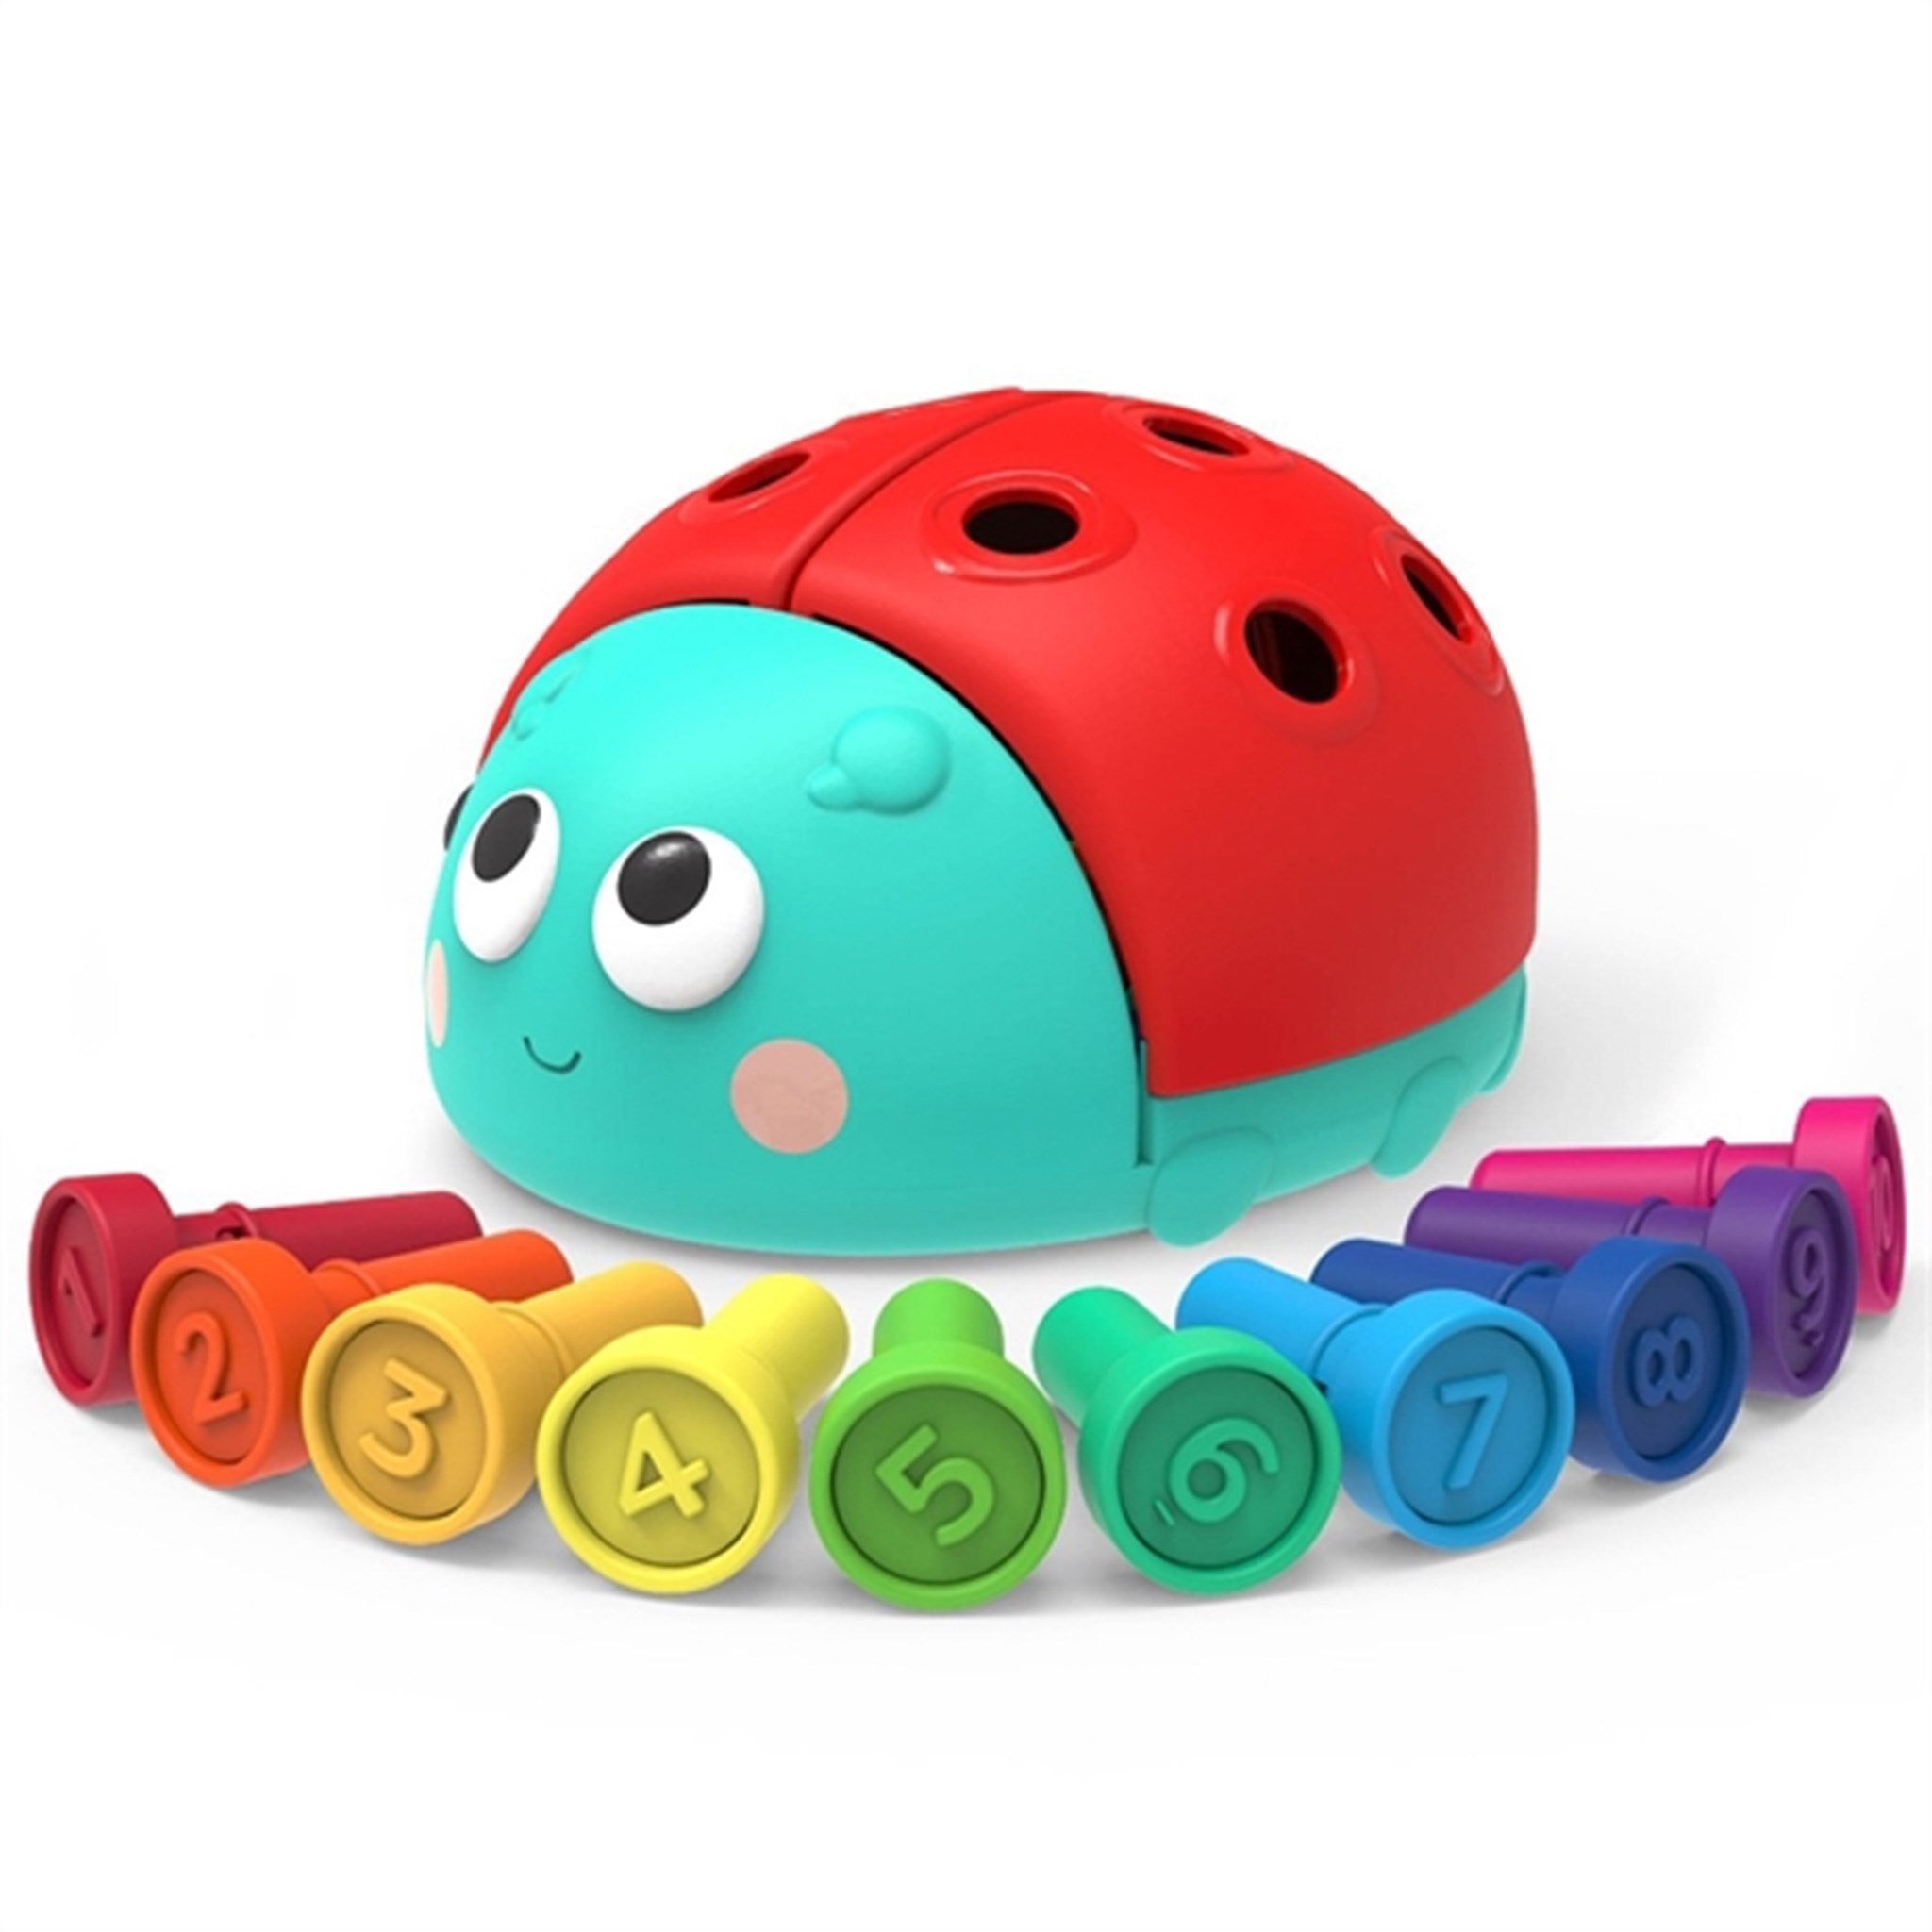 B-toys Battat Count Ladybug